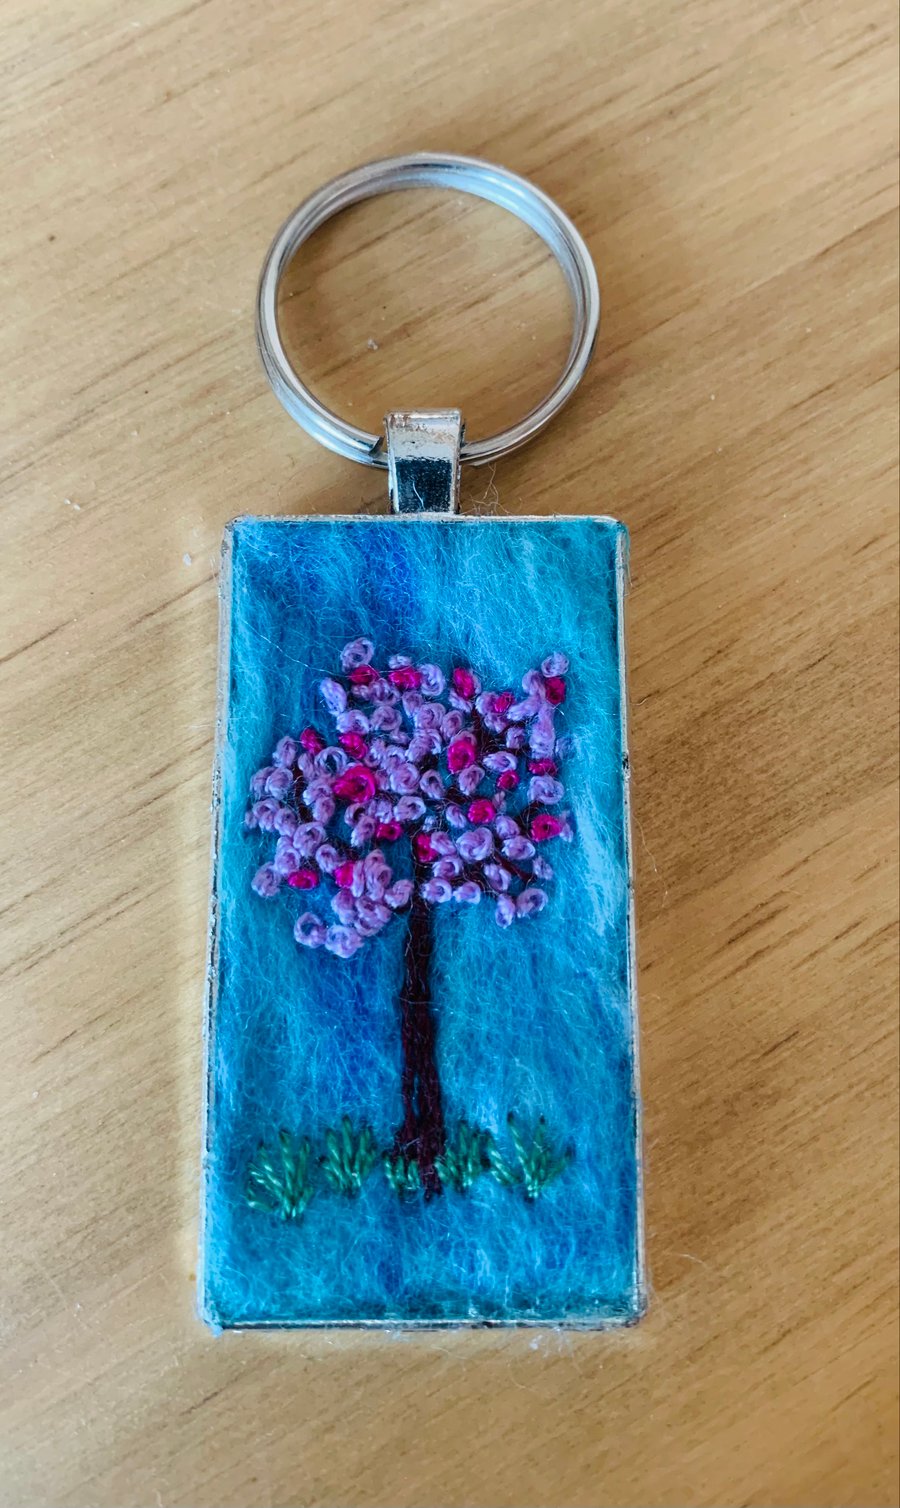 Blossom tree key ring